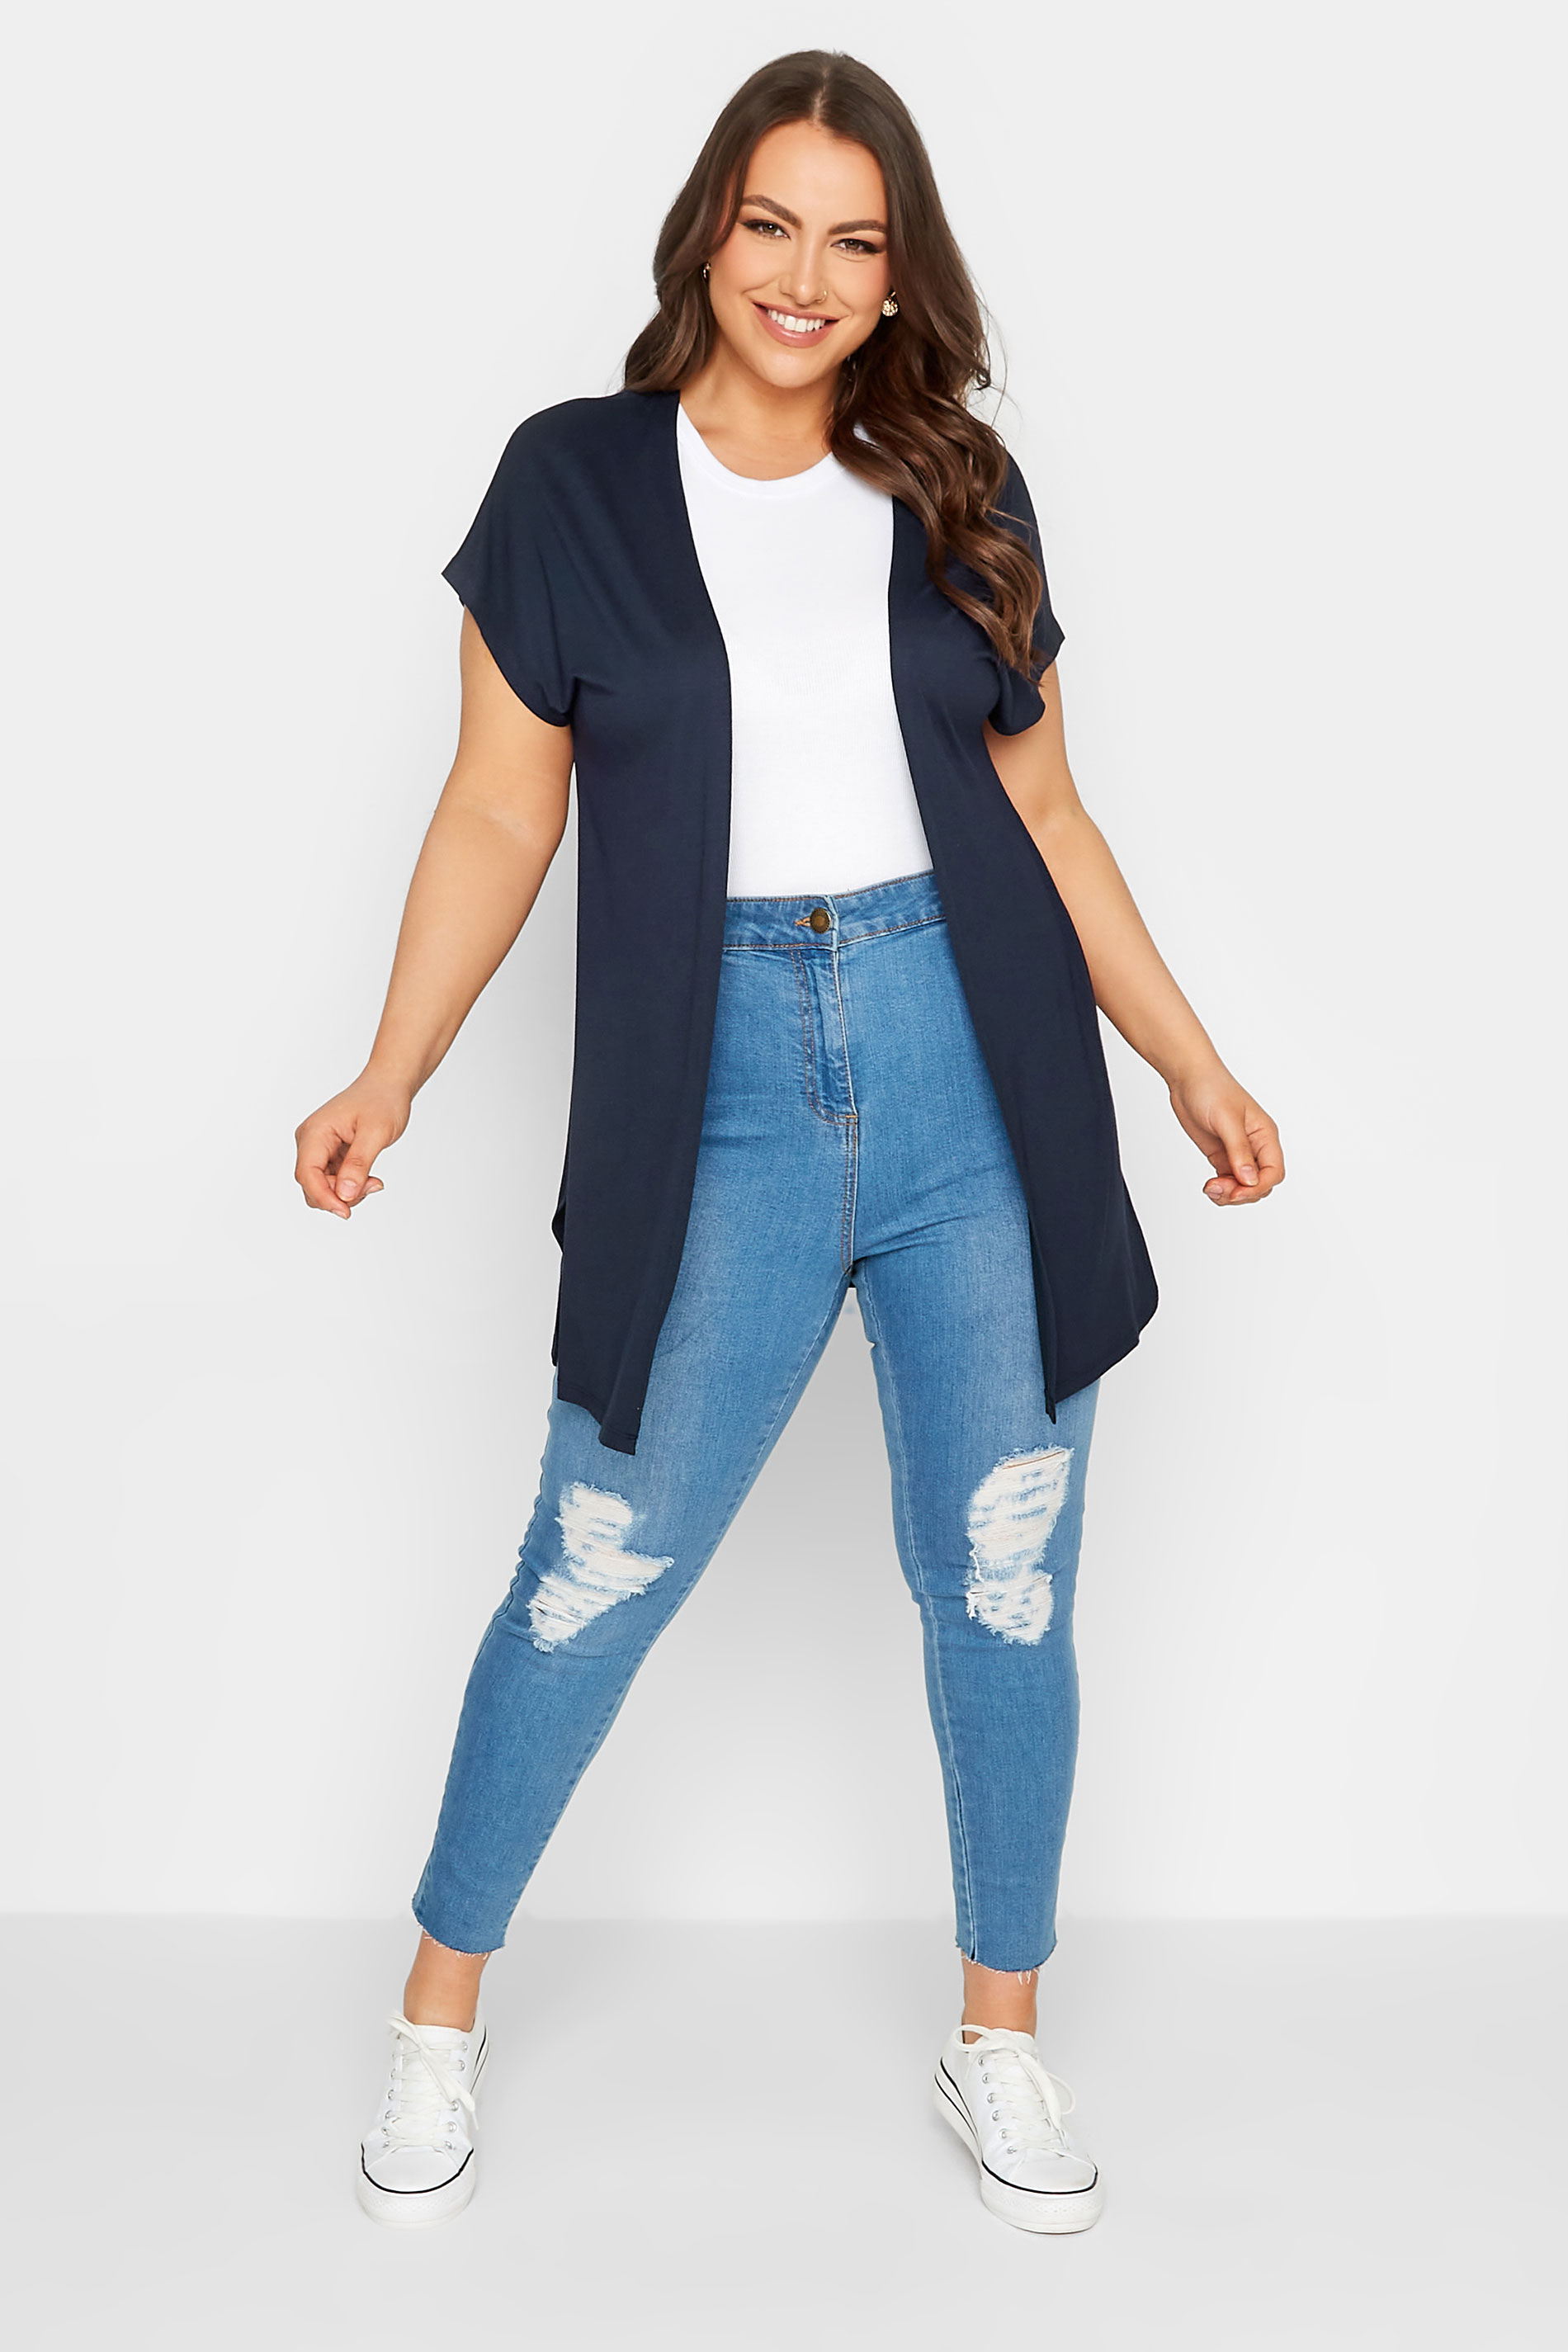 YOURS Plus Size Navy Blue Short Sleeve Cardigan | Yours Clothing 2